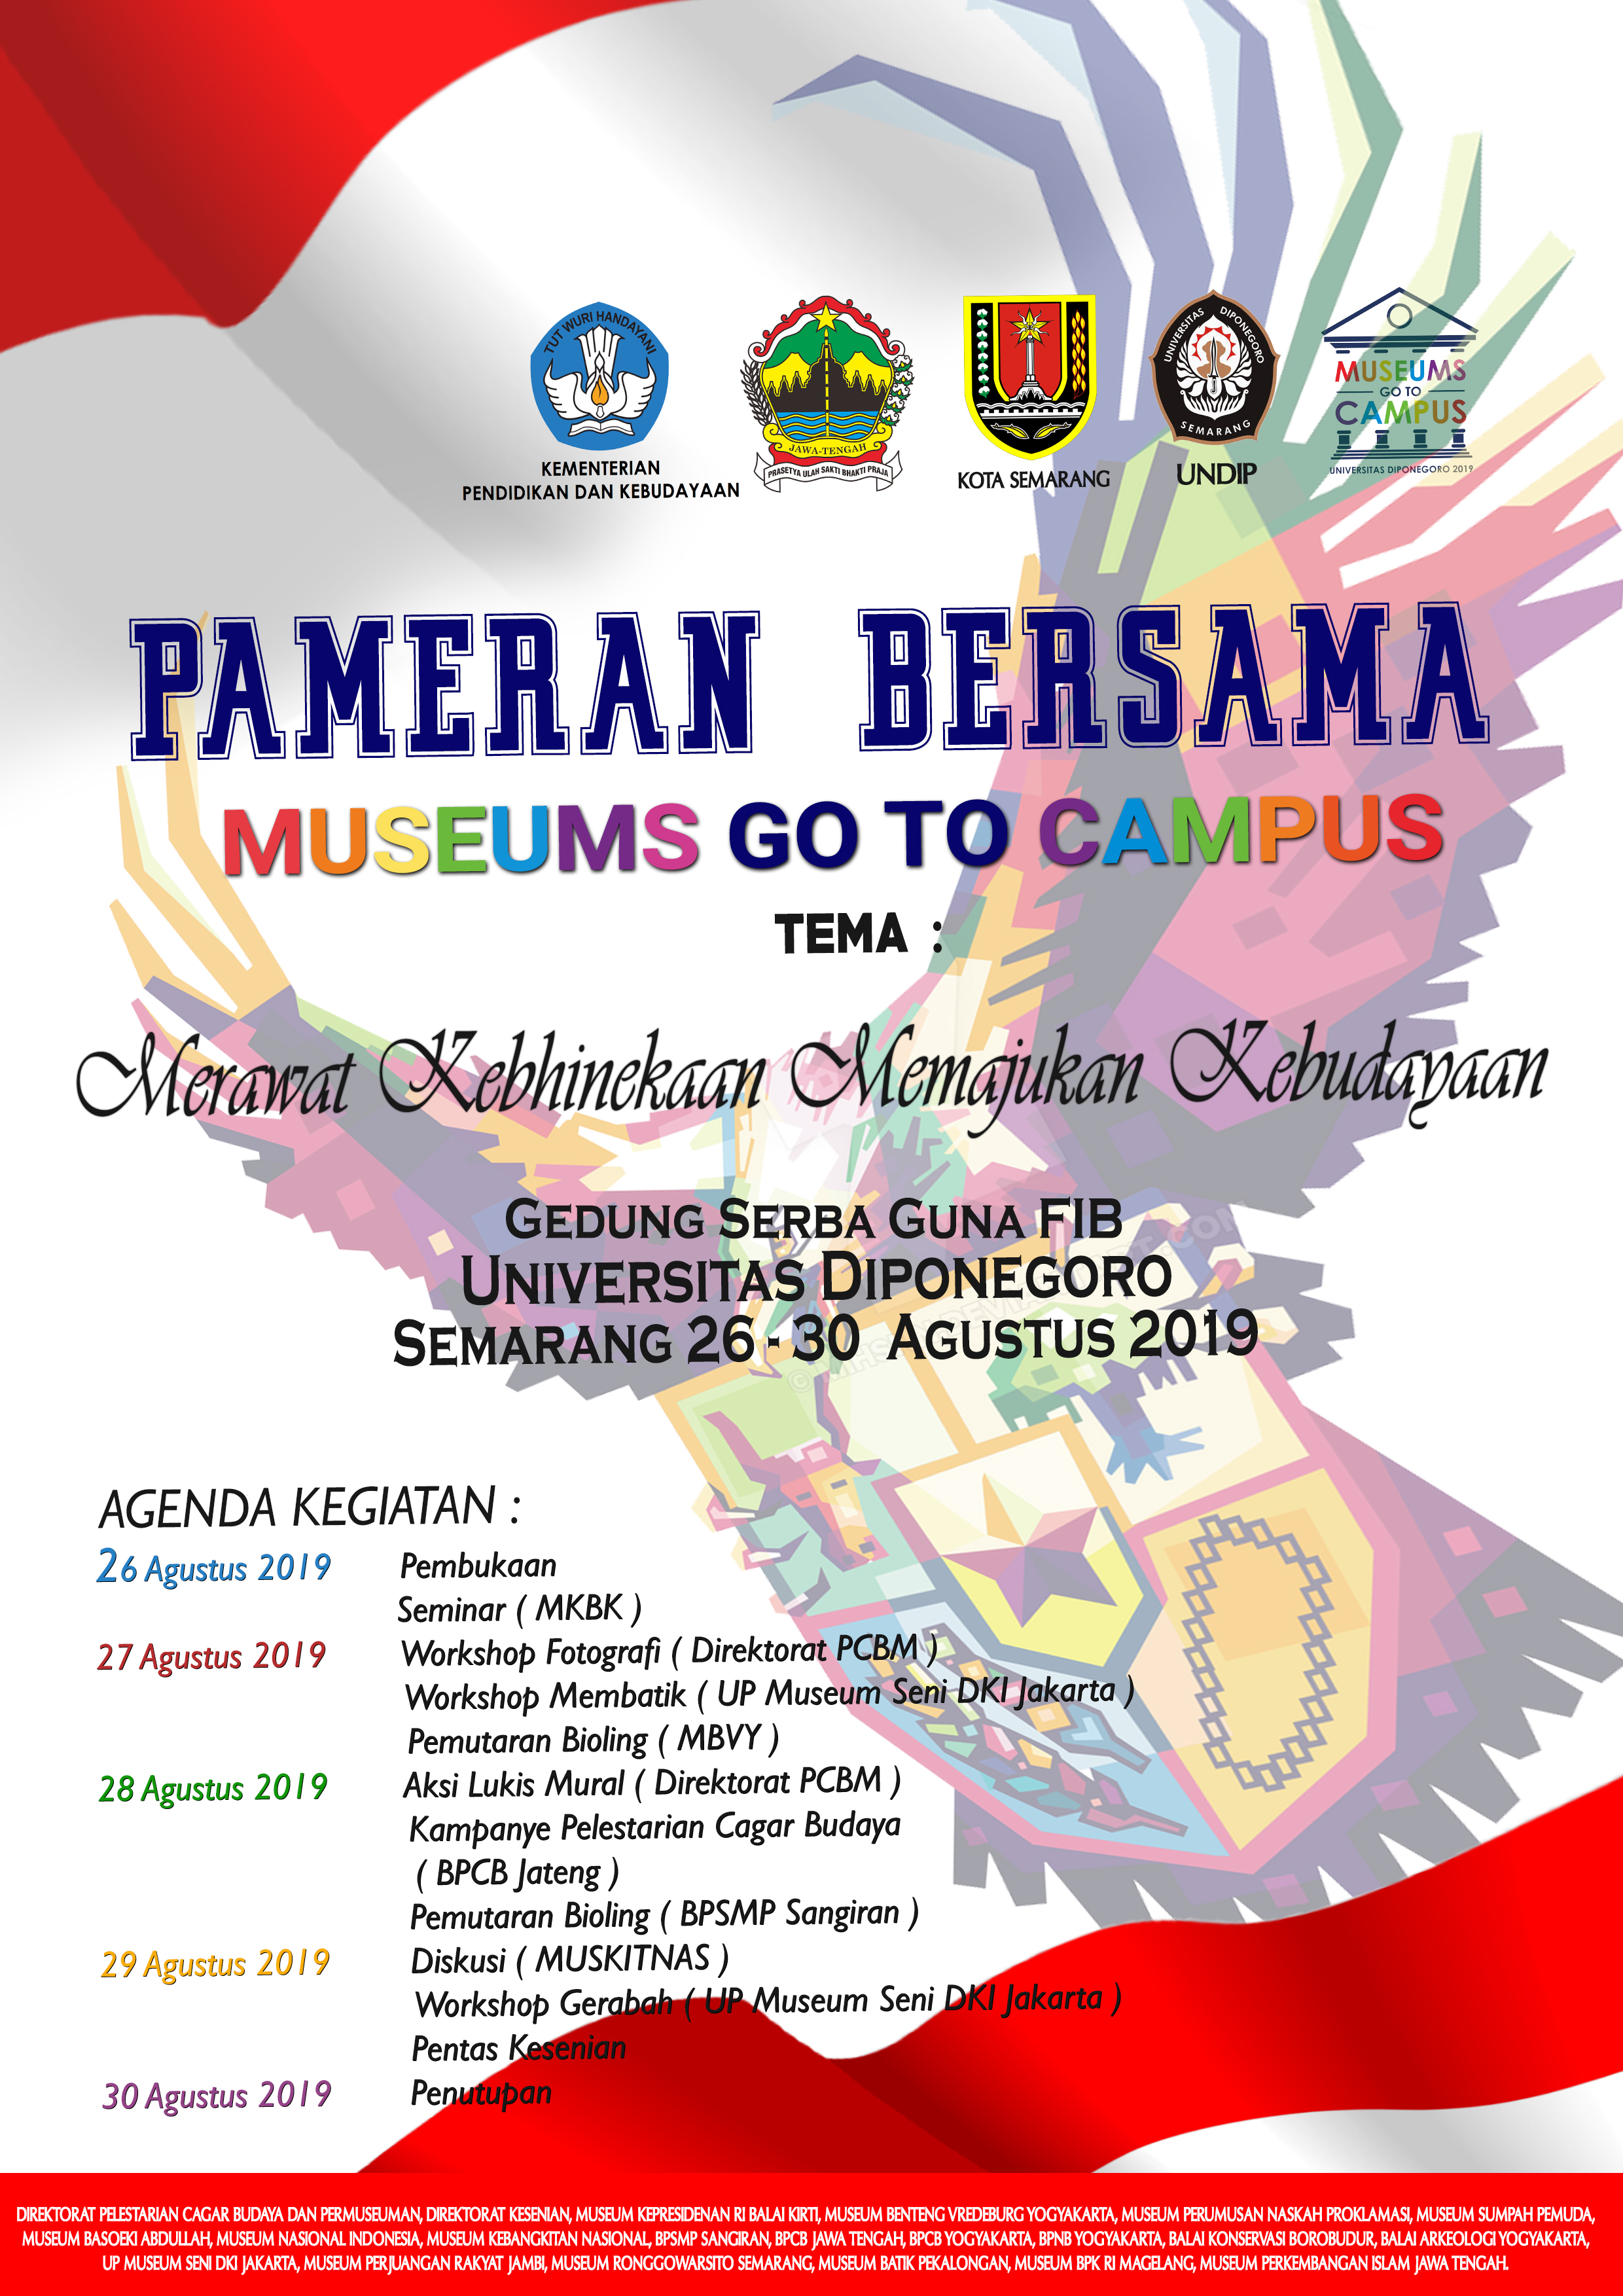 You are currently viewing Pameran Bersama Museums Go To Campus UNDIP Semarang